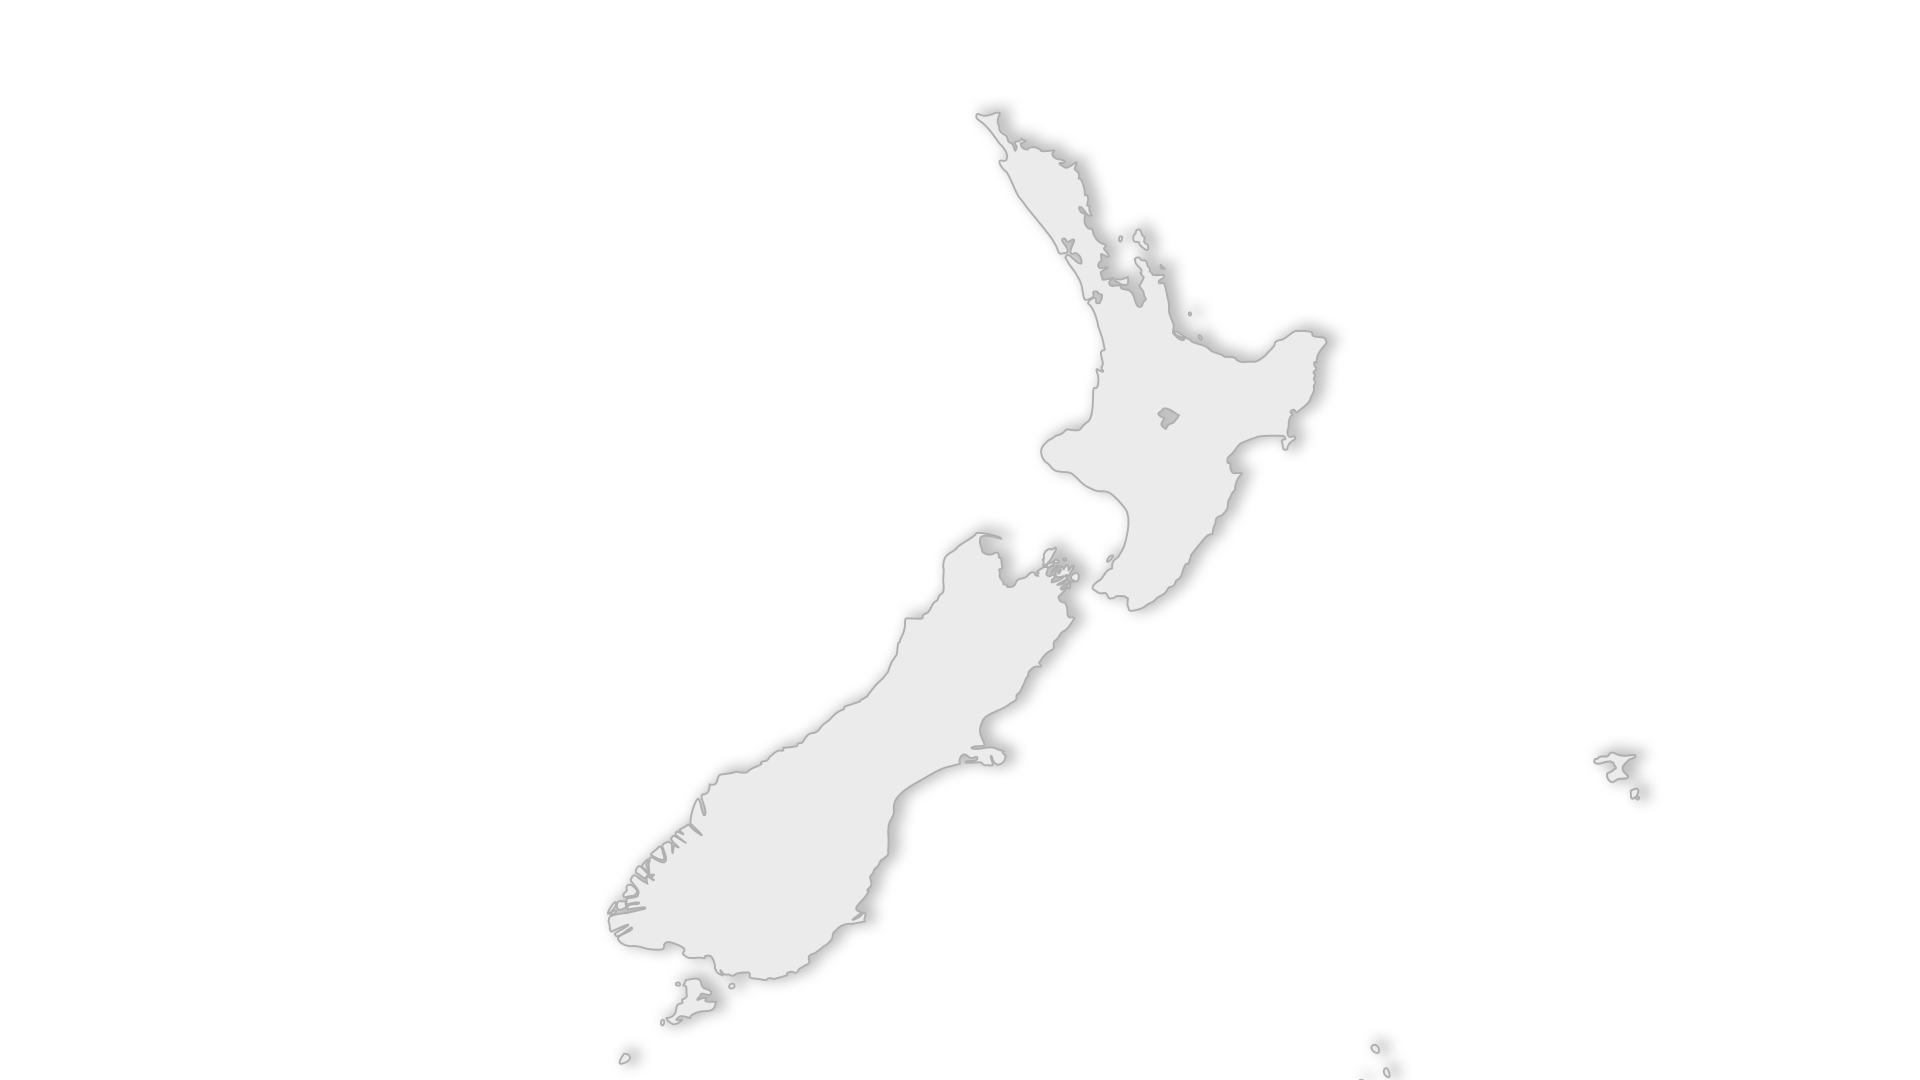 New Zealand Region Map